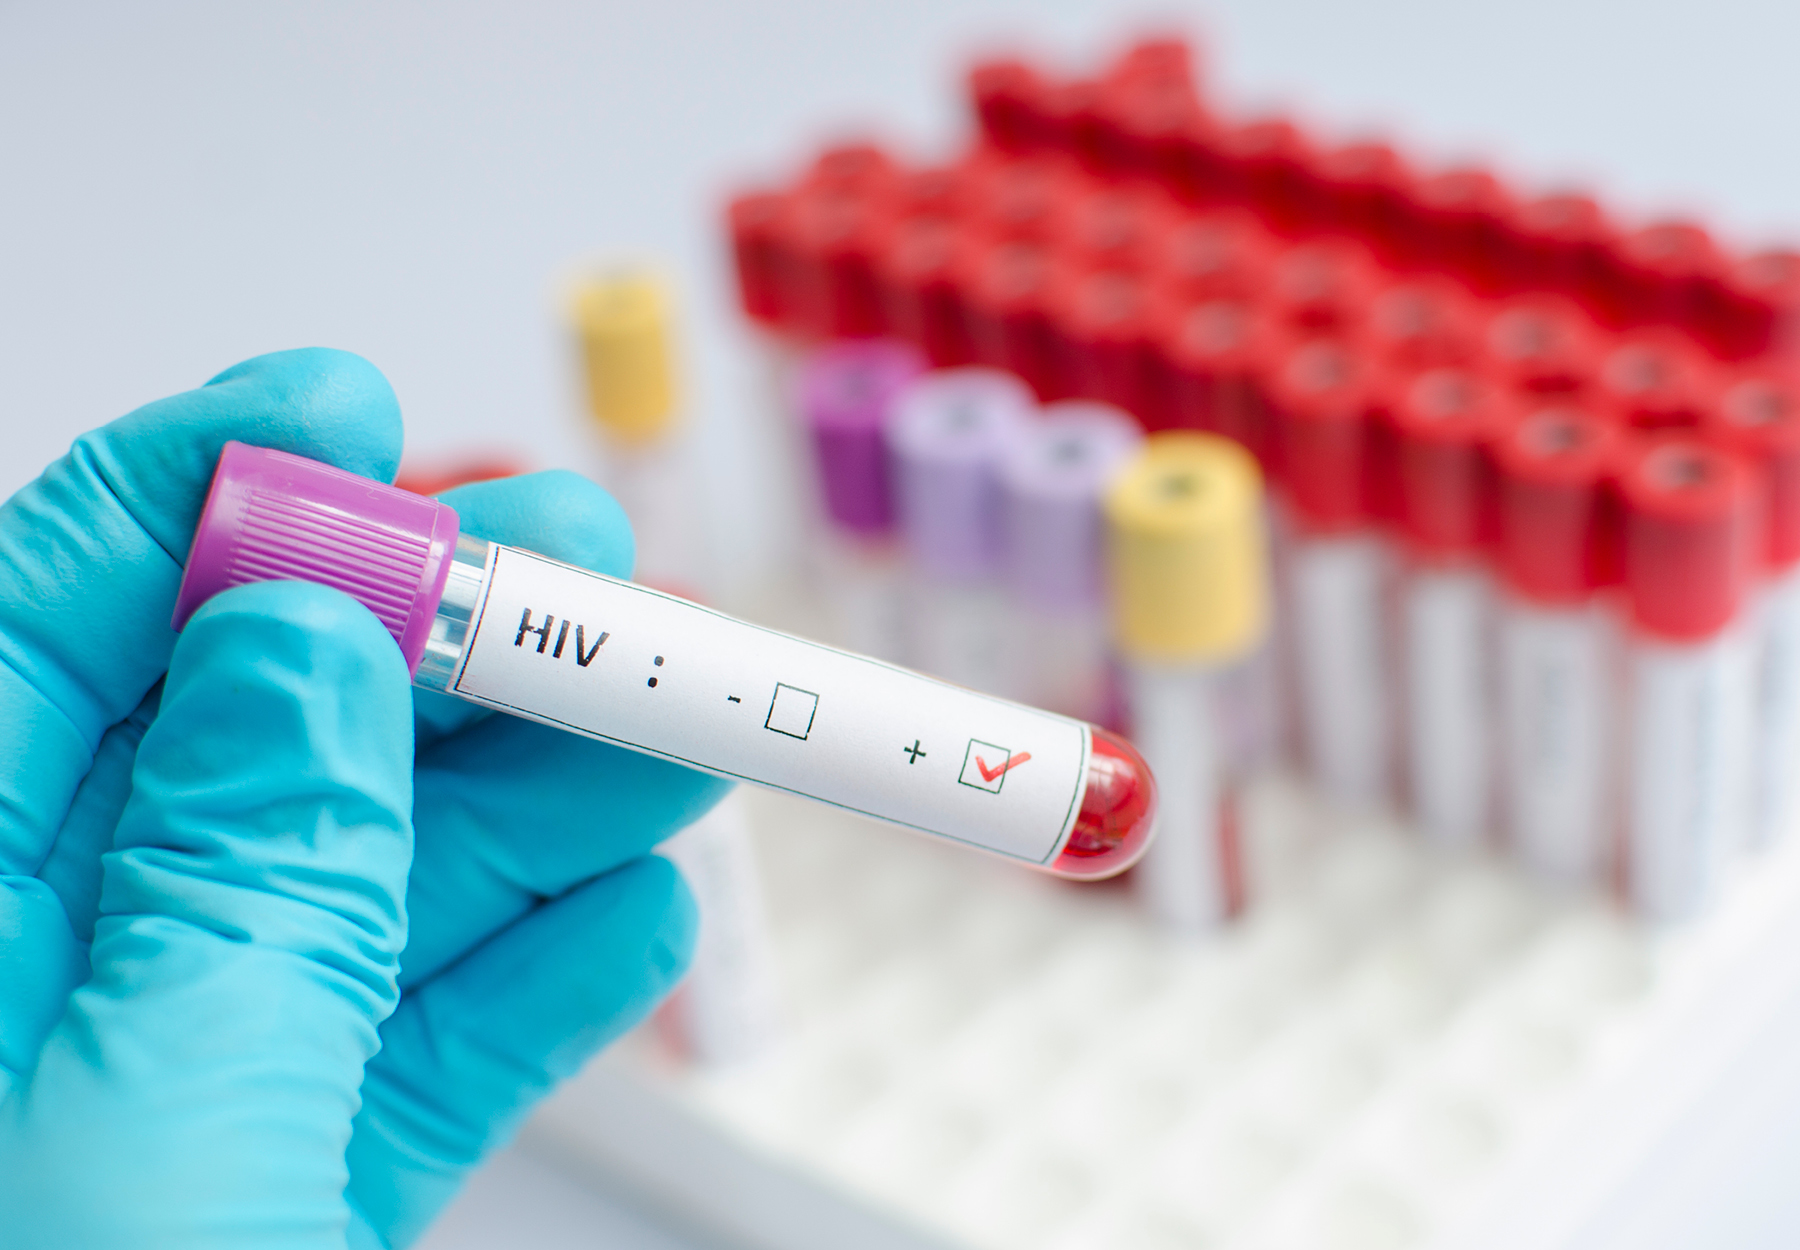 HIV blood sample iStock Image